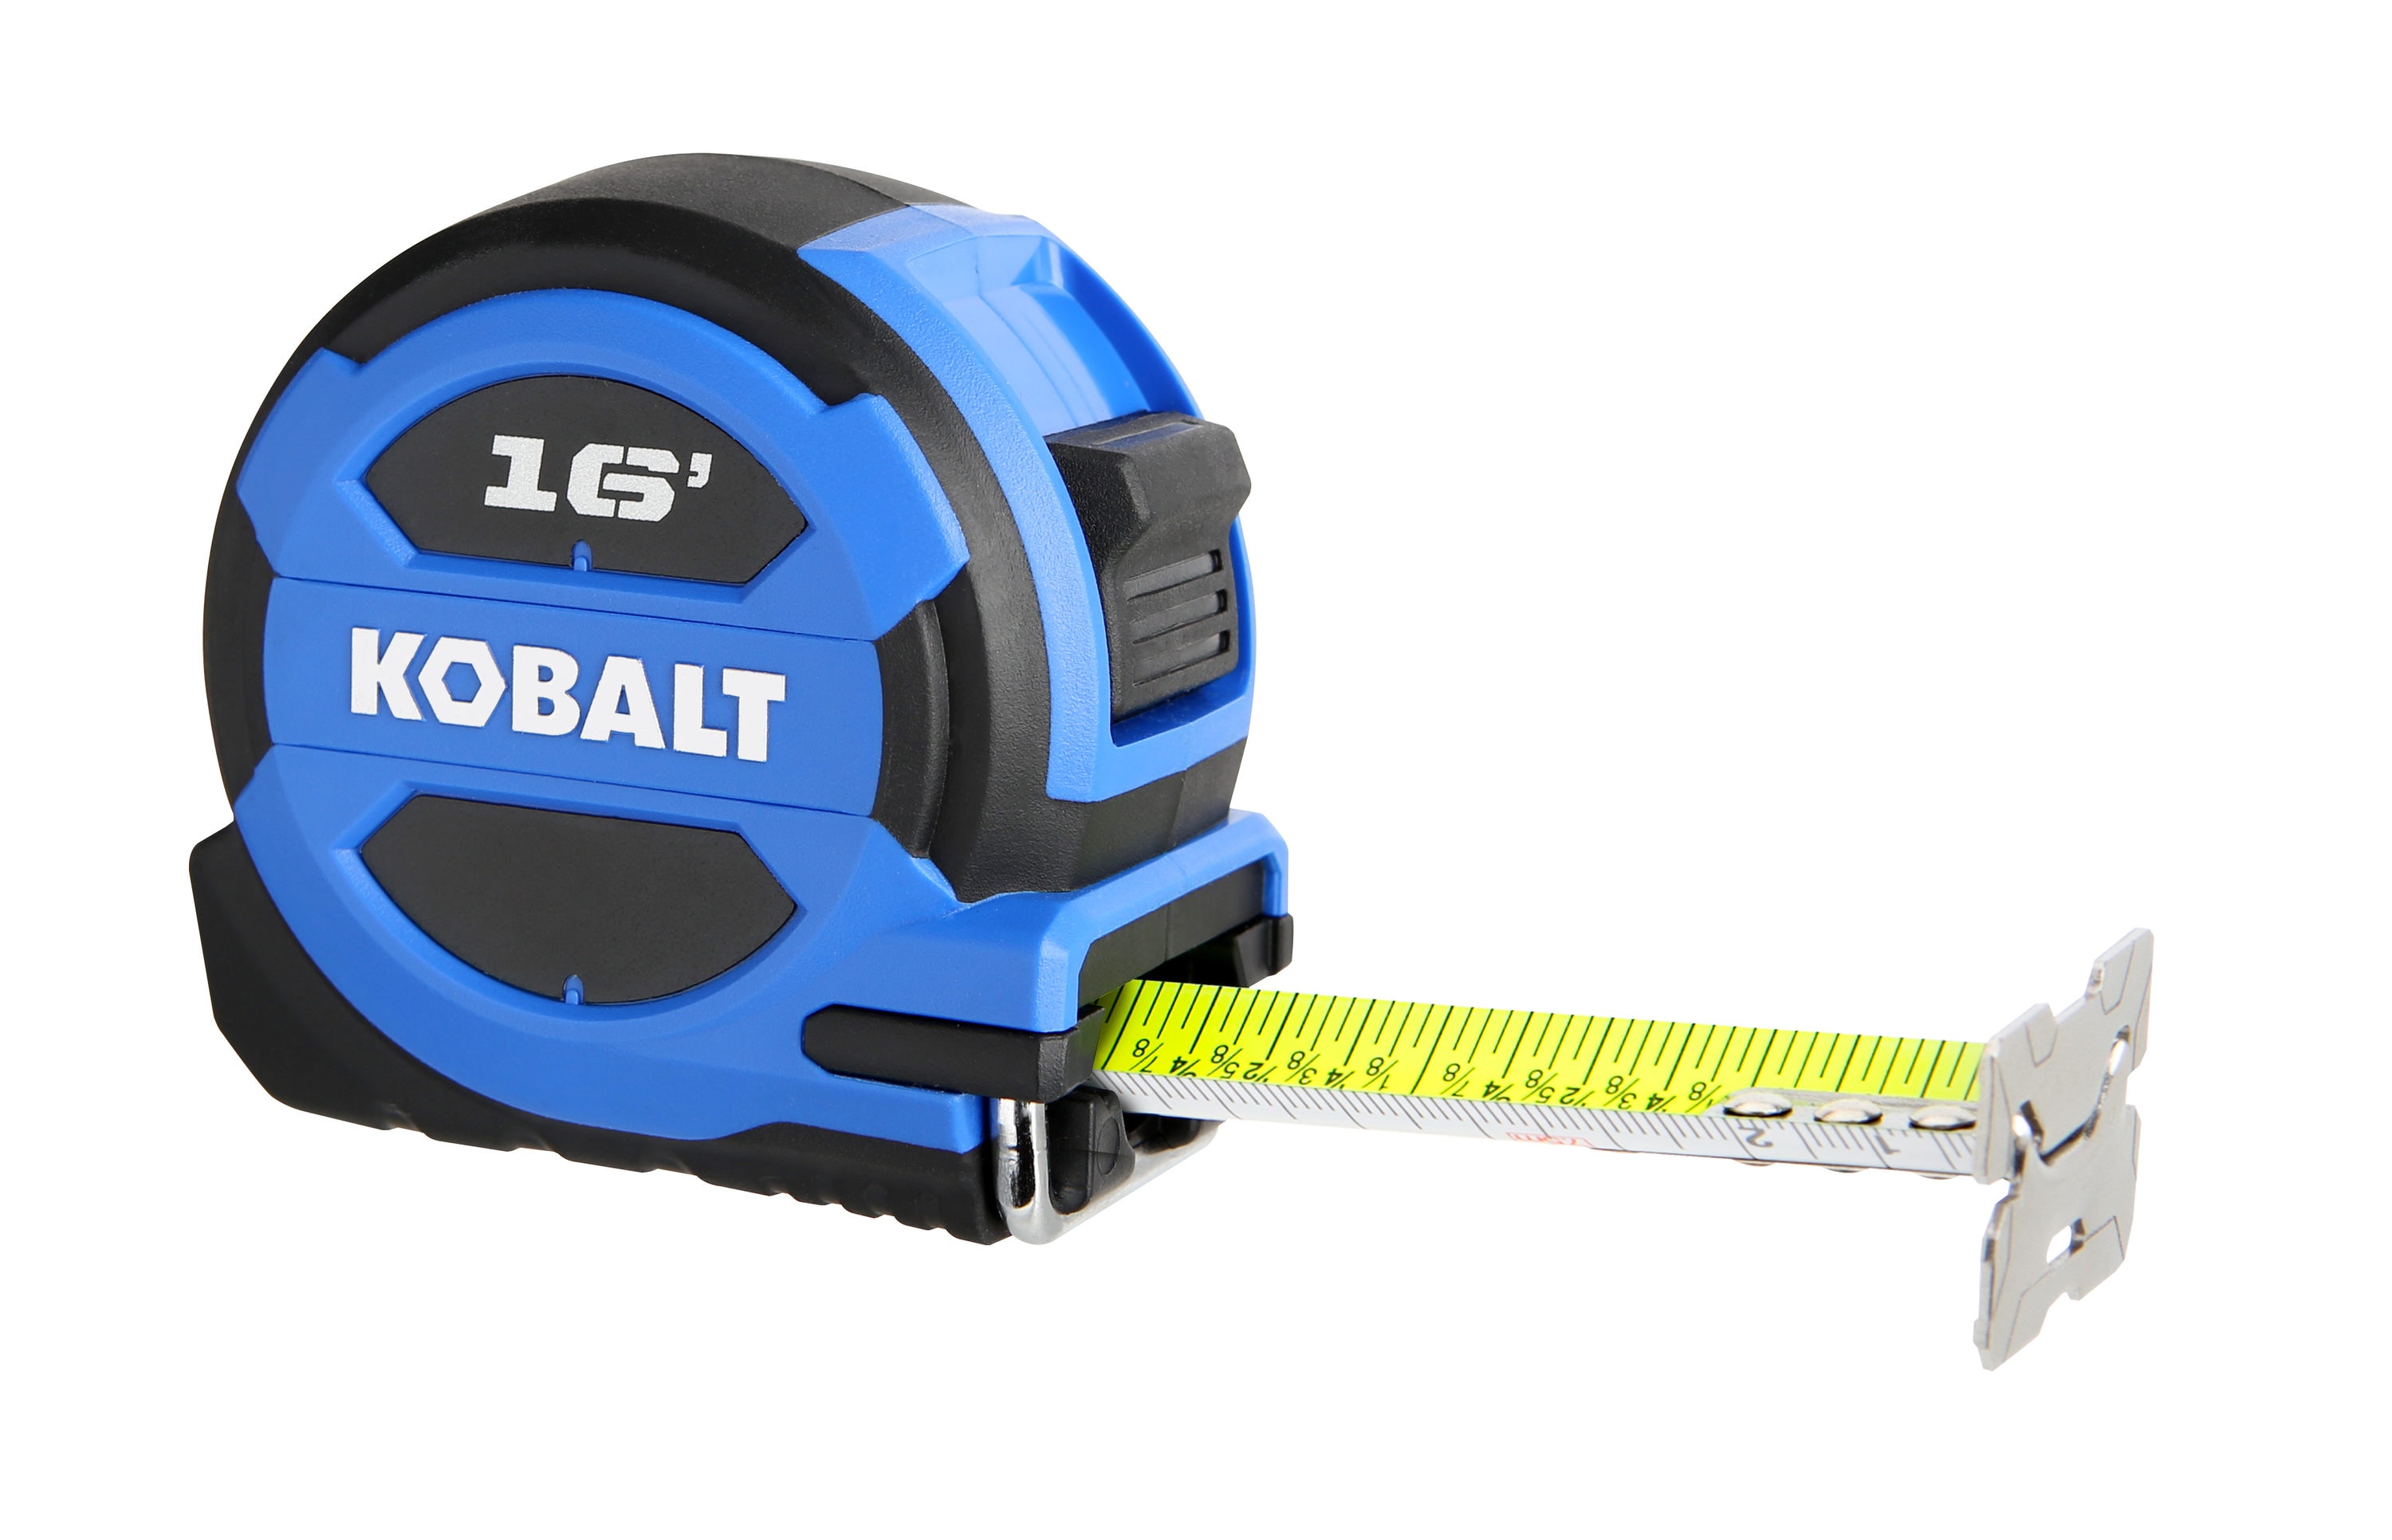 Kobalt Tape measure 16-ft Tape Measure at